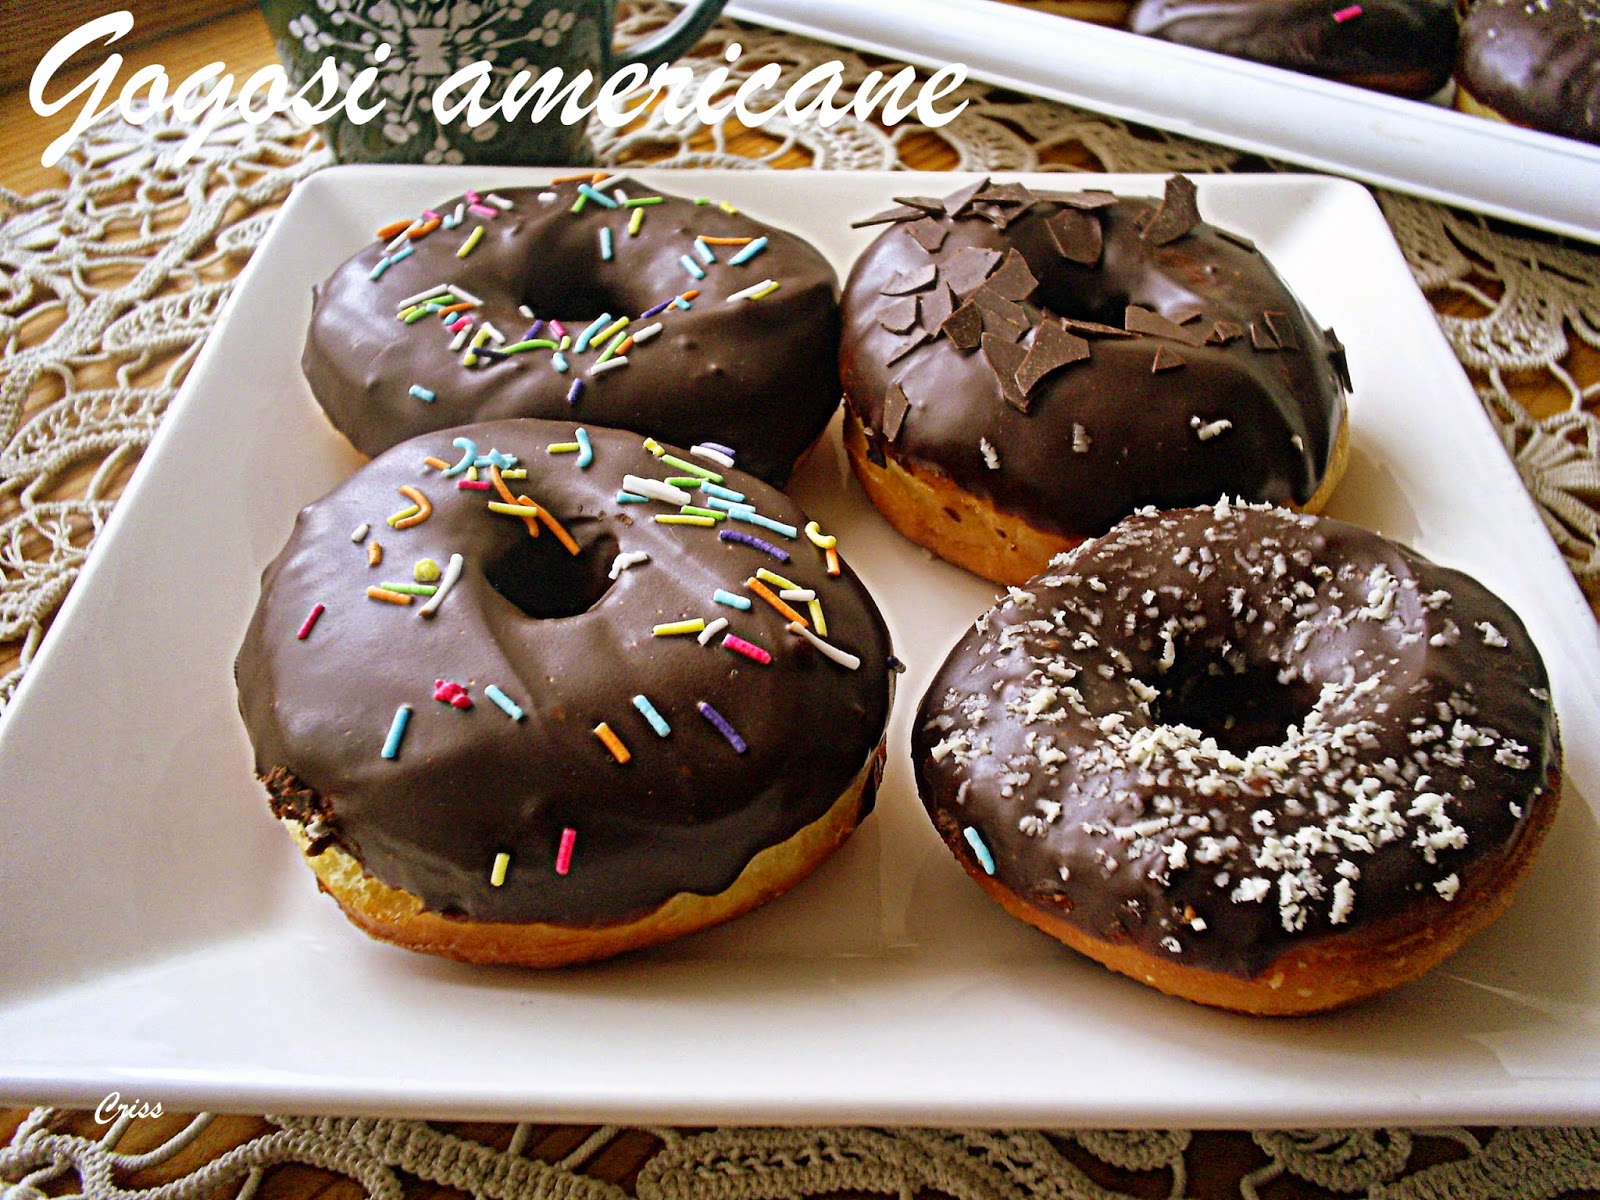 Gogosi americane - Donuts